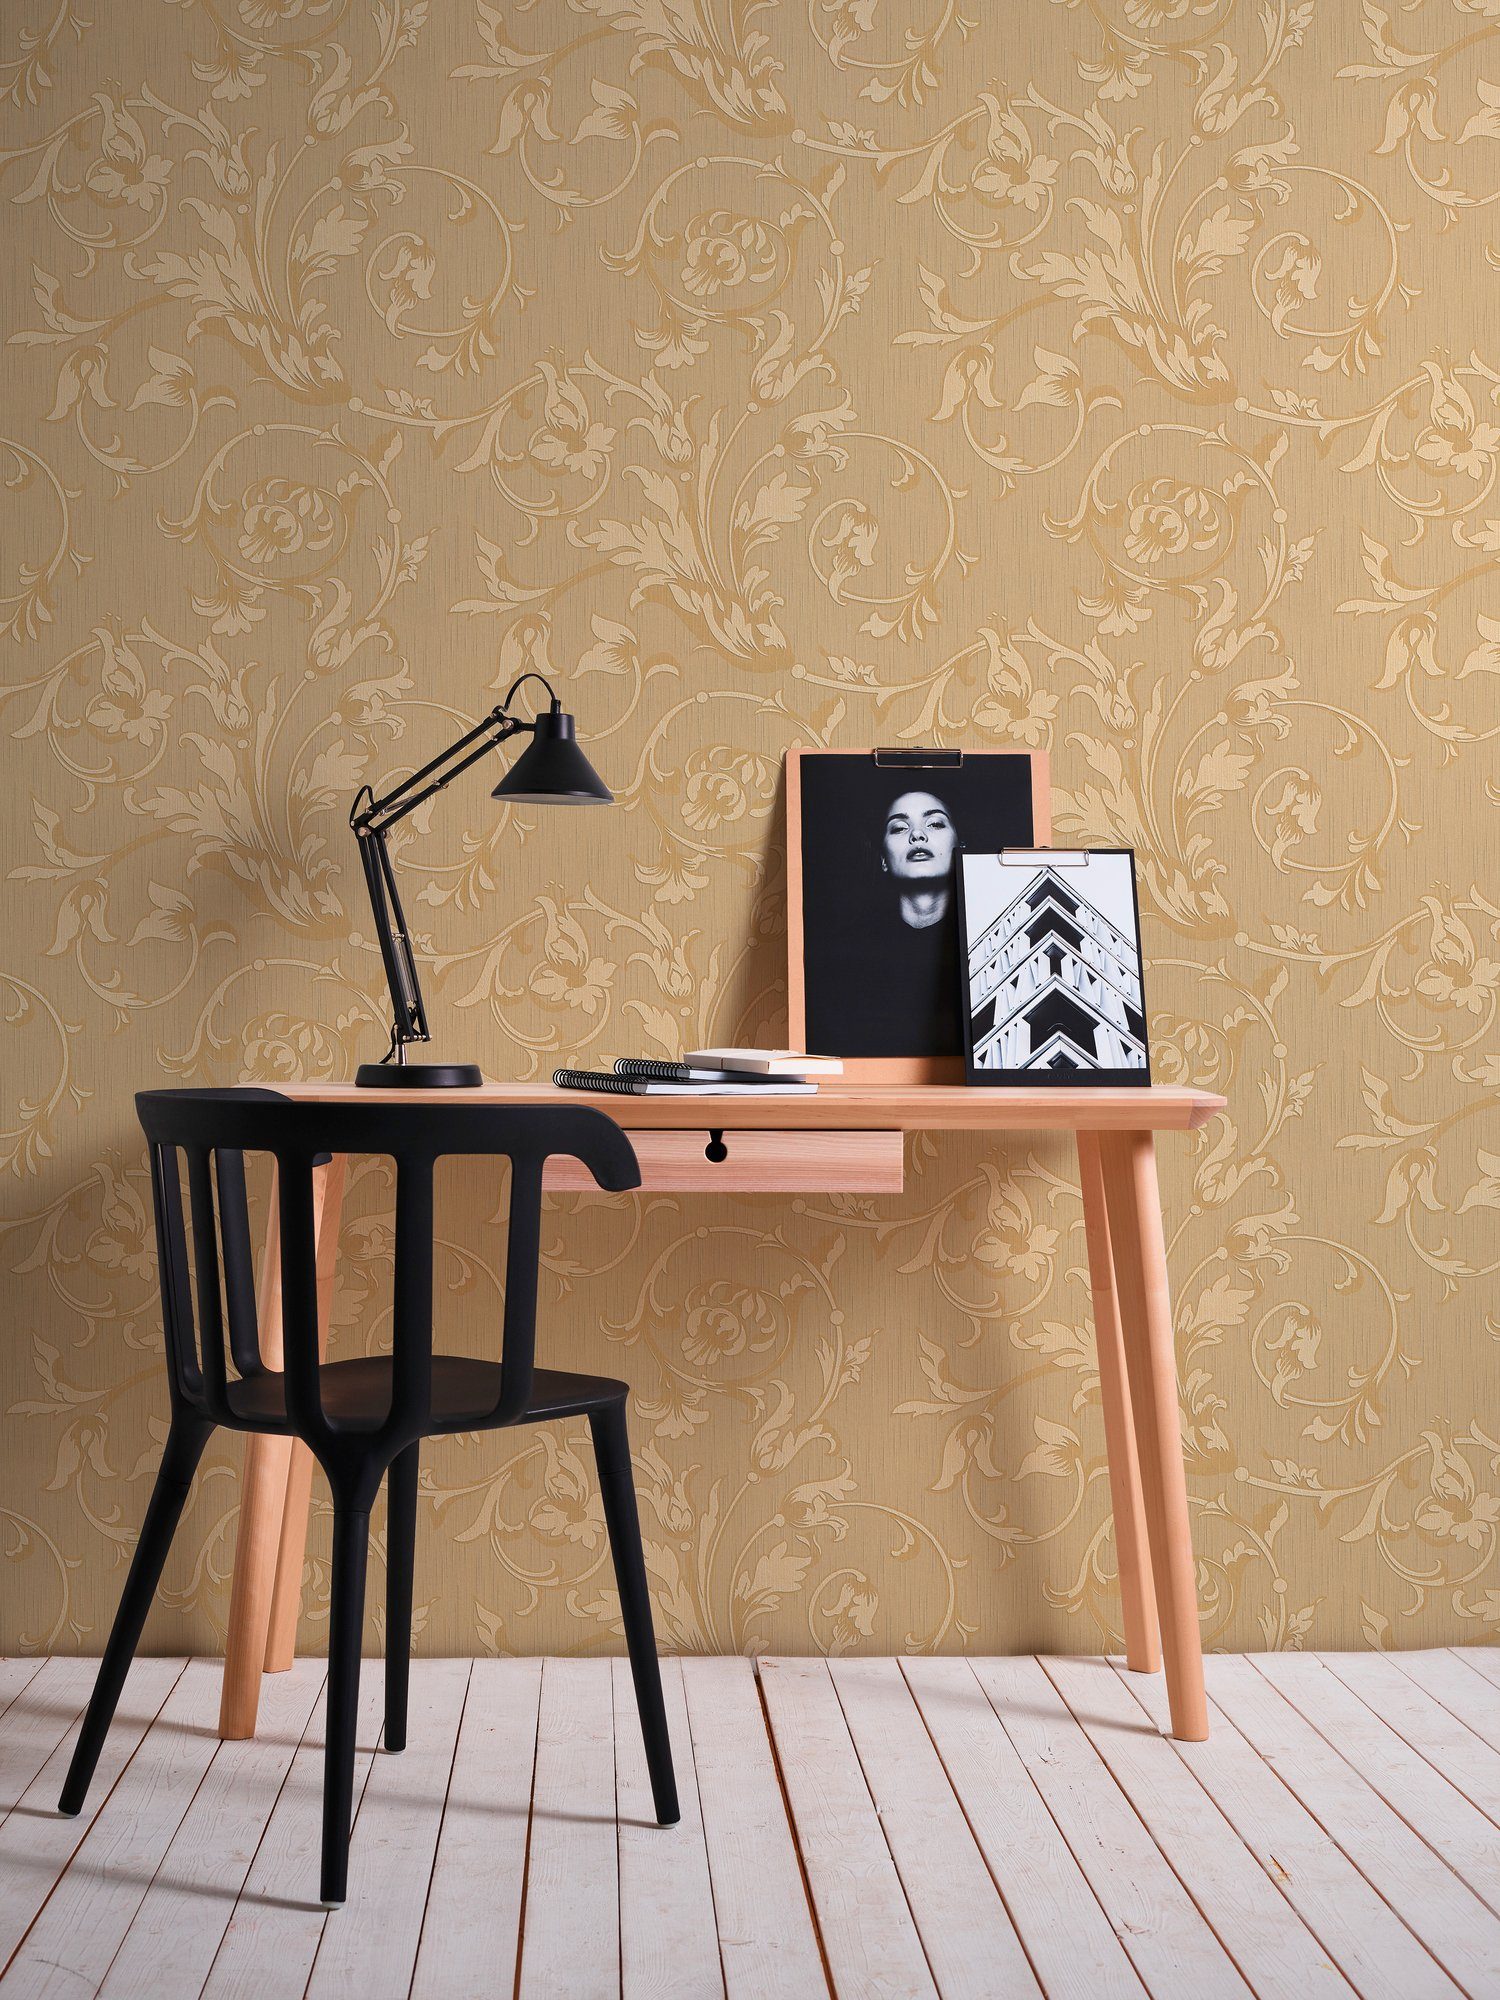 A.S. Création Architects Paper Textiltapete Barock, orange/beige Blumen Floral samtig, Tessuto, Tapete floral